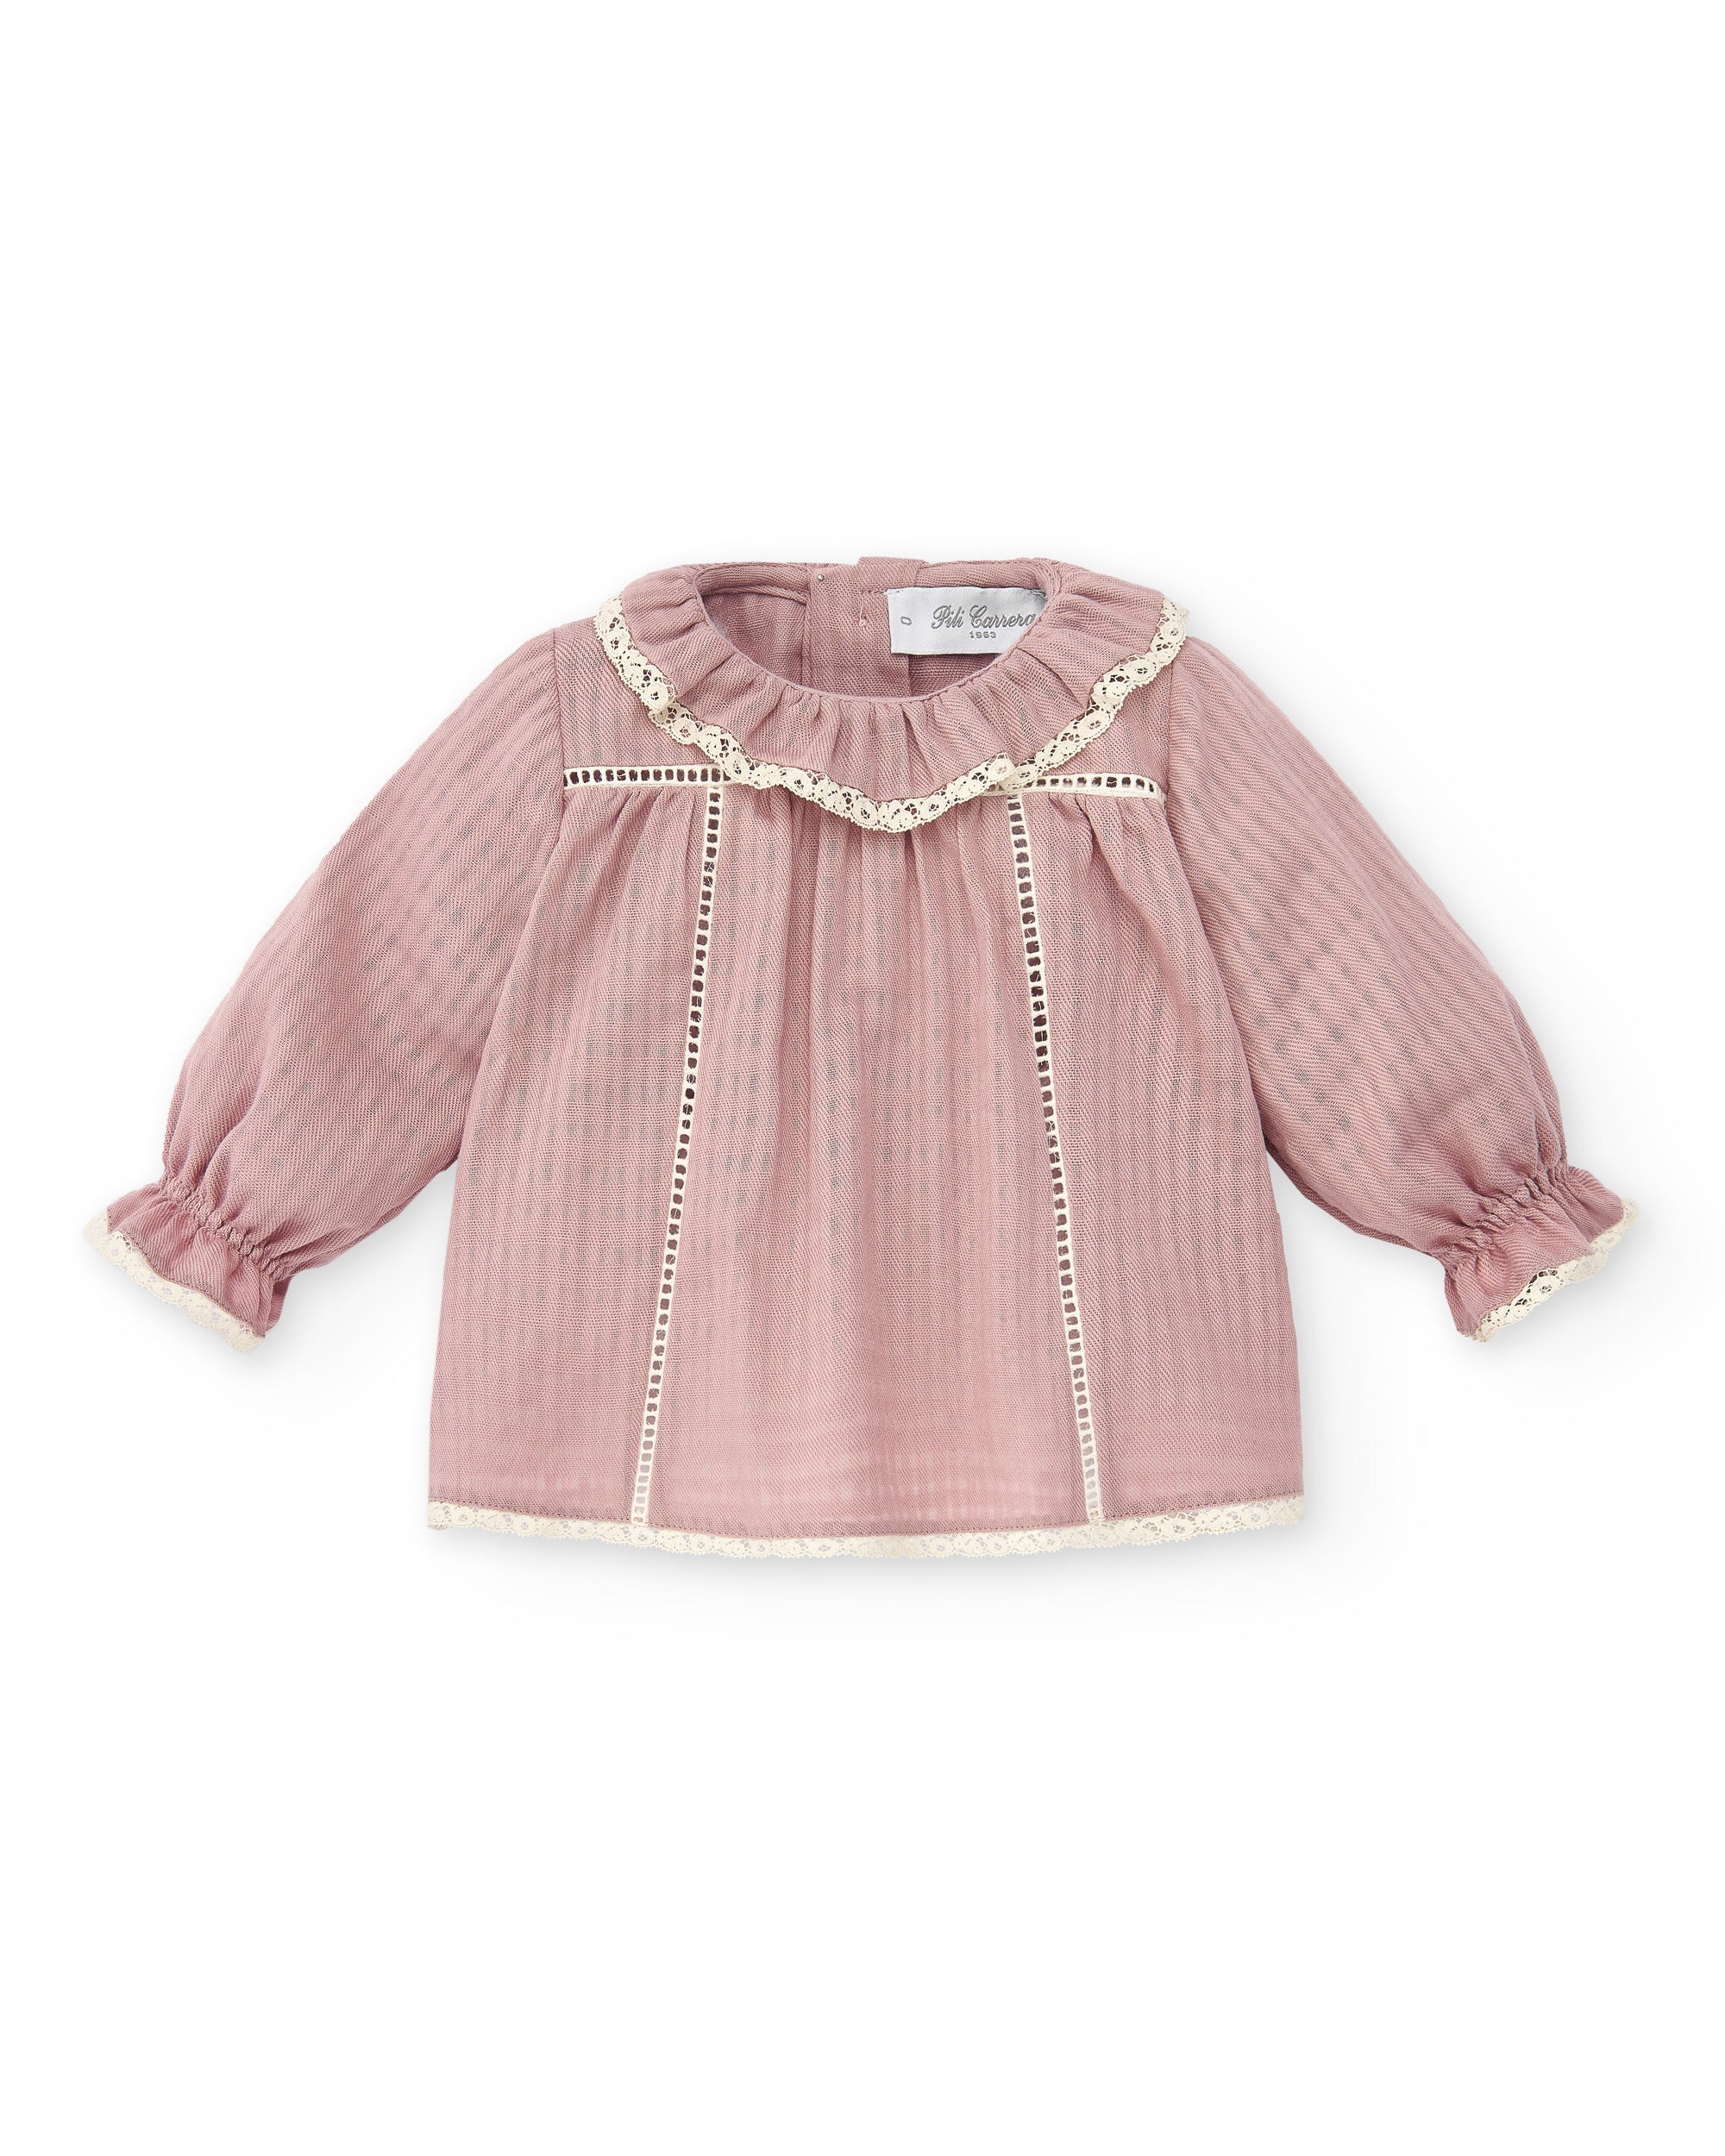 Pale Pink Cotton Blouse with Lace details